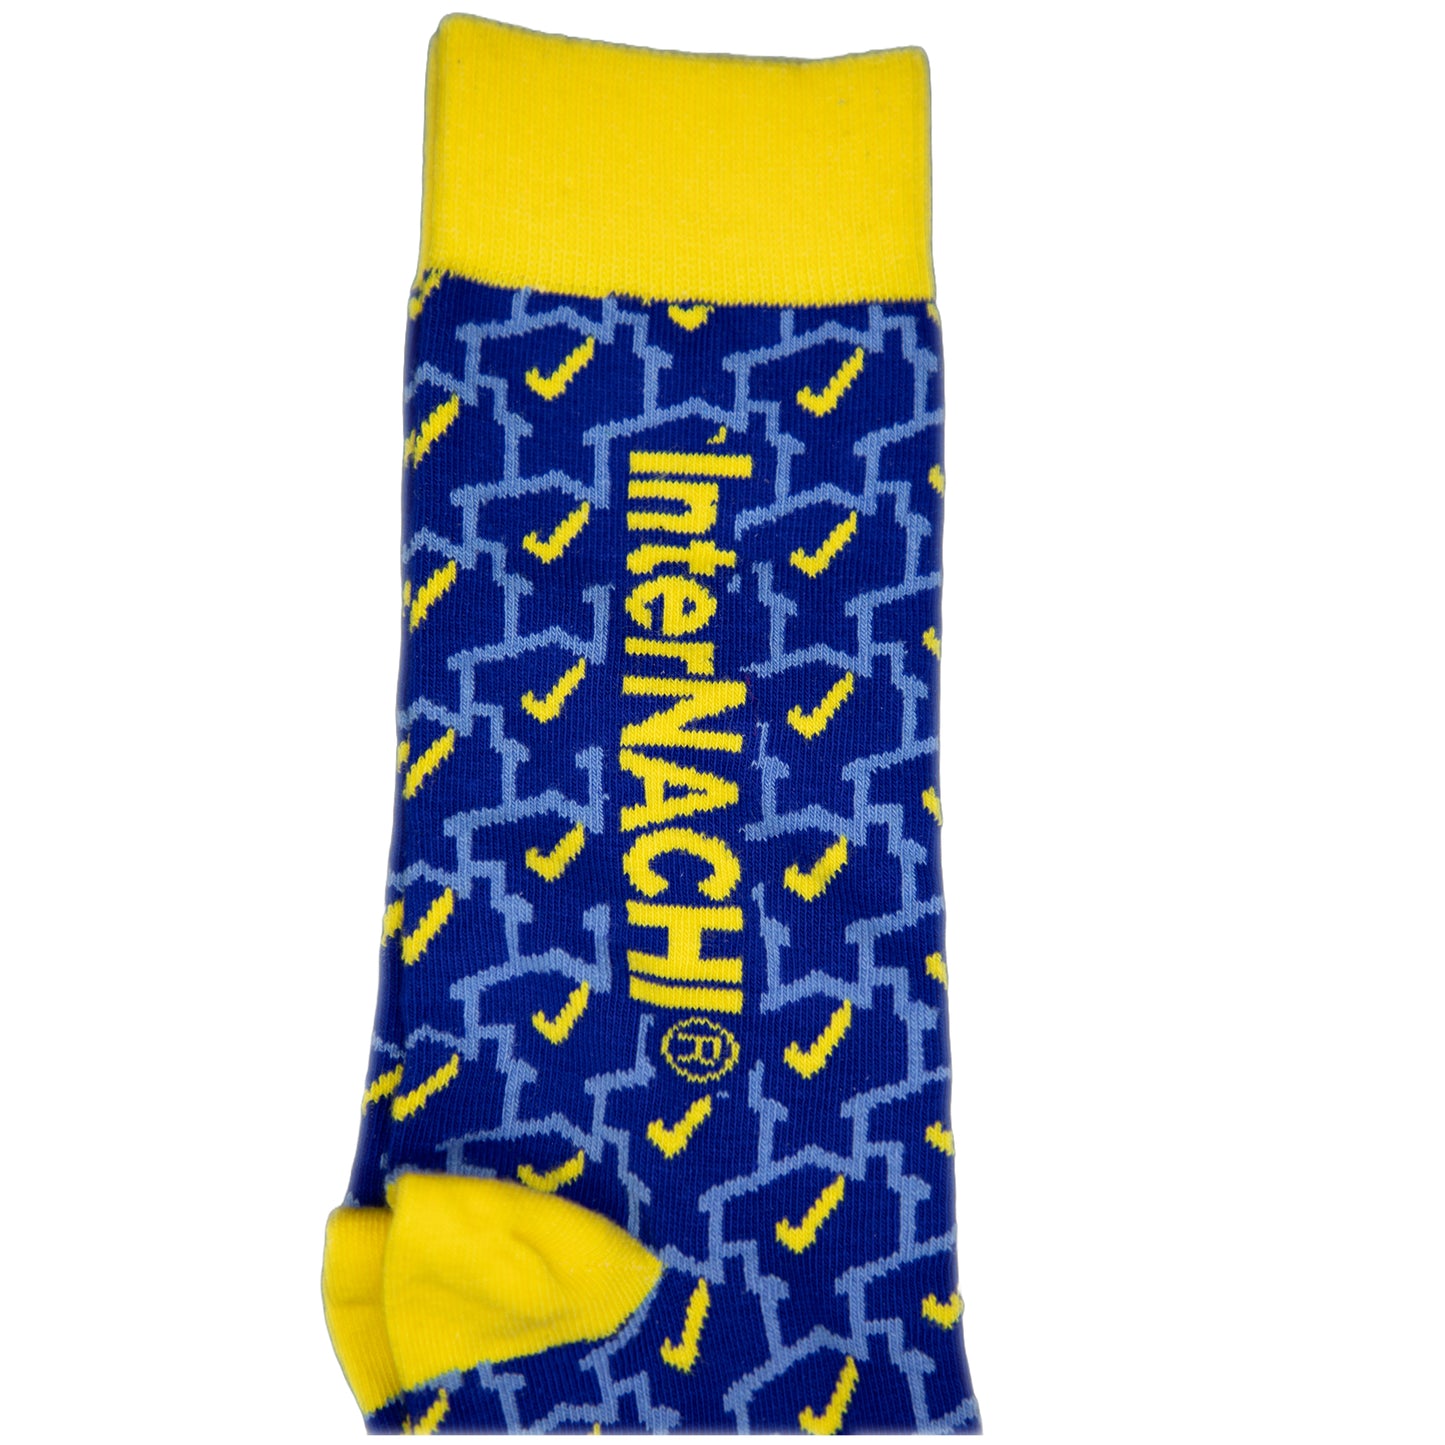 InterNACHI® Socks